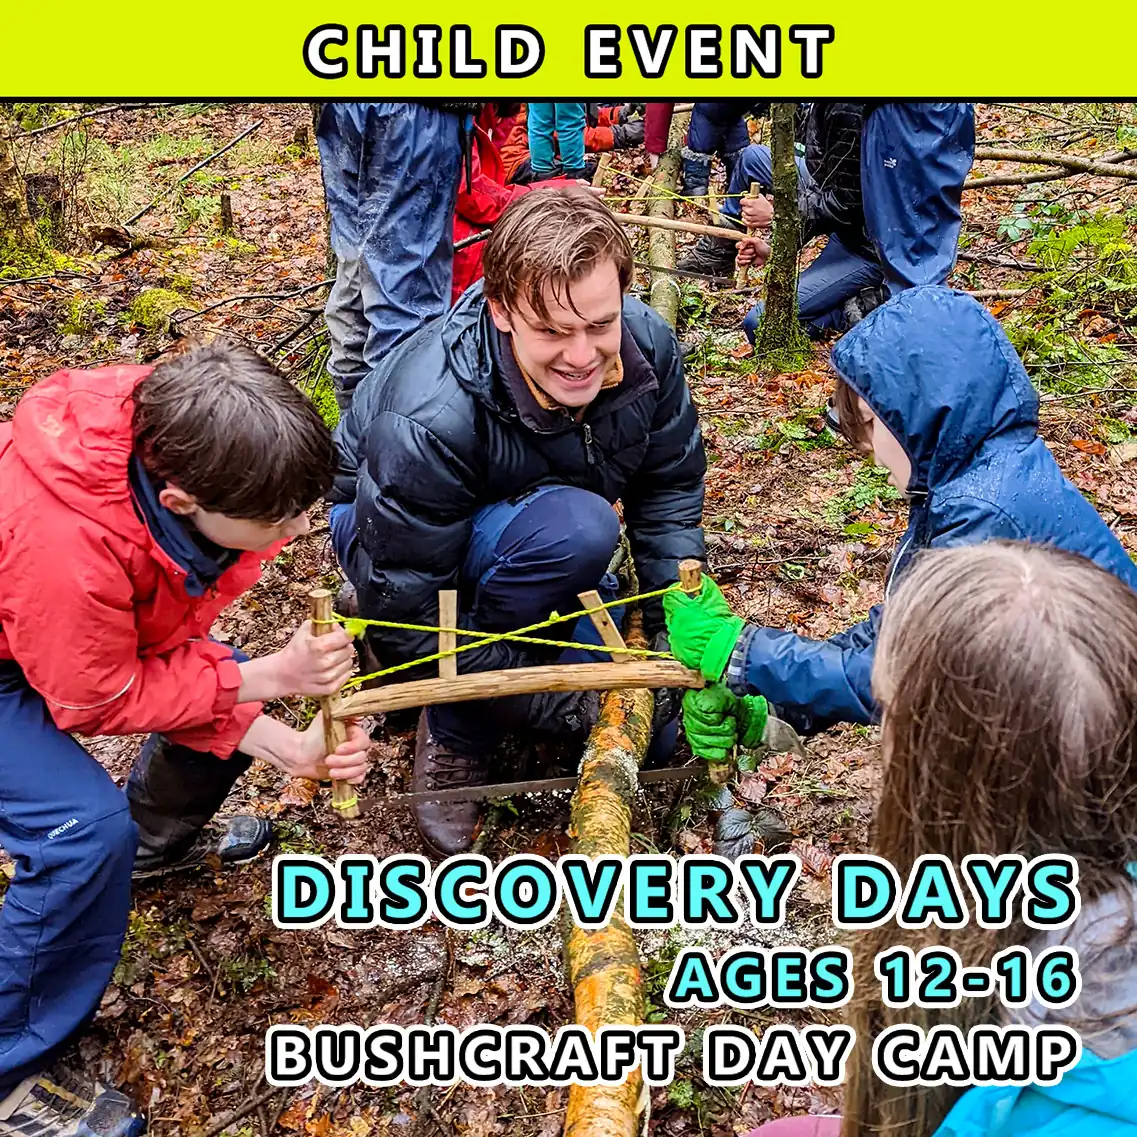 Bushcraft Day Camp <br>Discovery Days